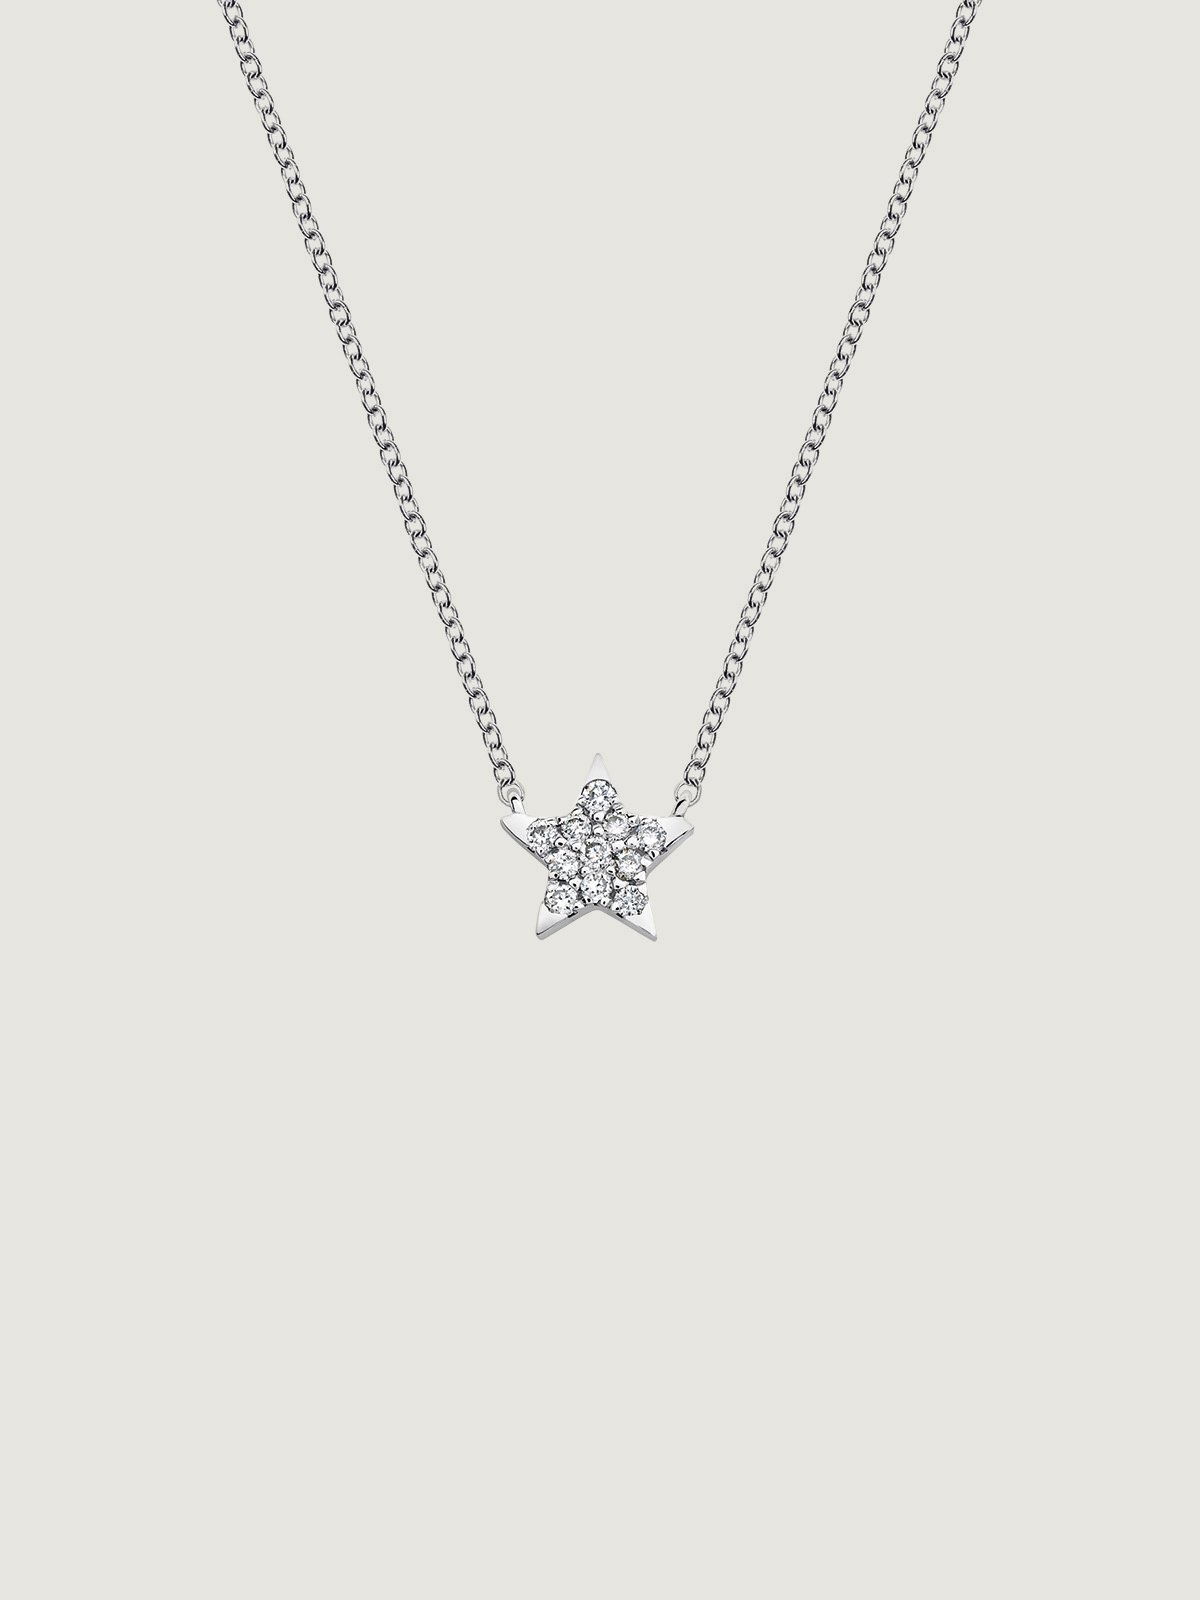 18K white gold pendant with diamond star